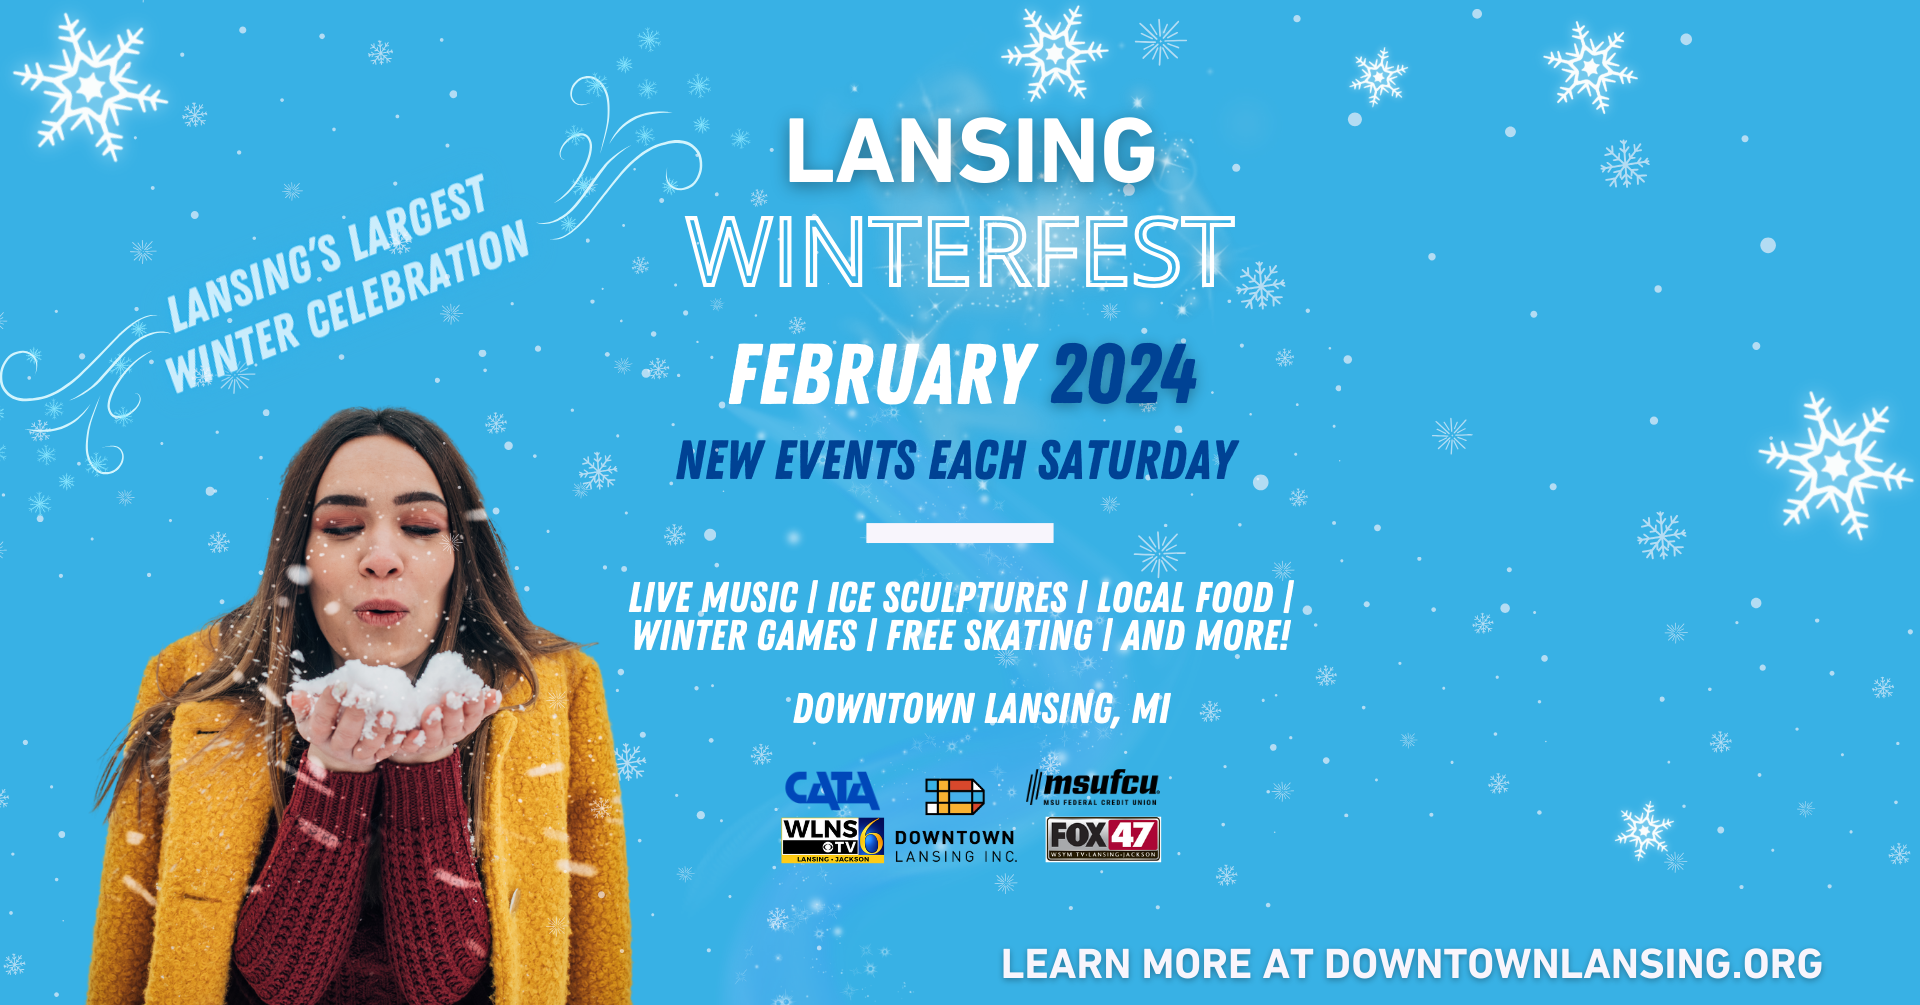 Lansing Winterfest FB Event Cover (1920 x 1005 px)